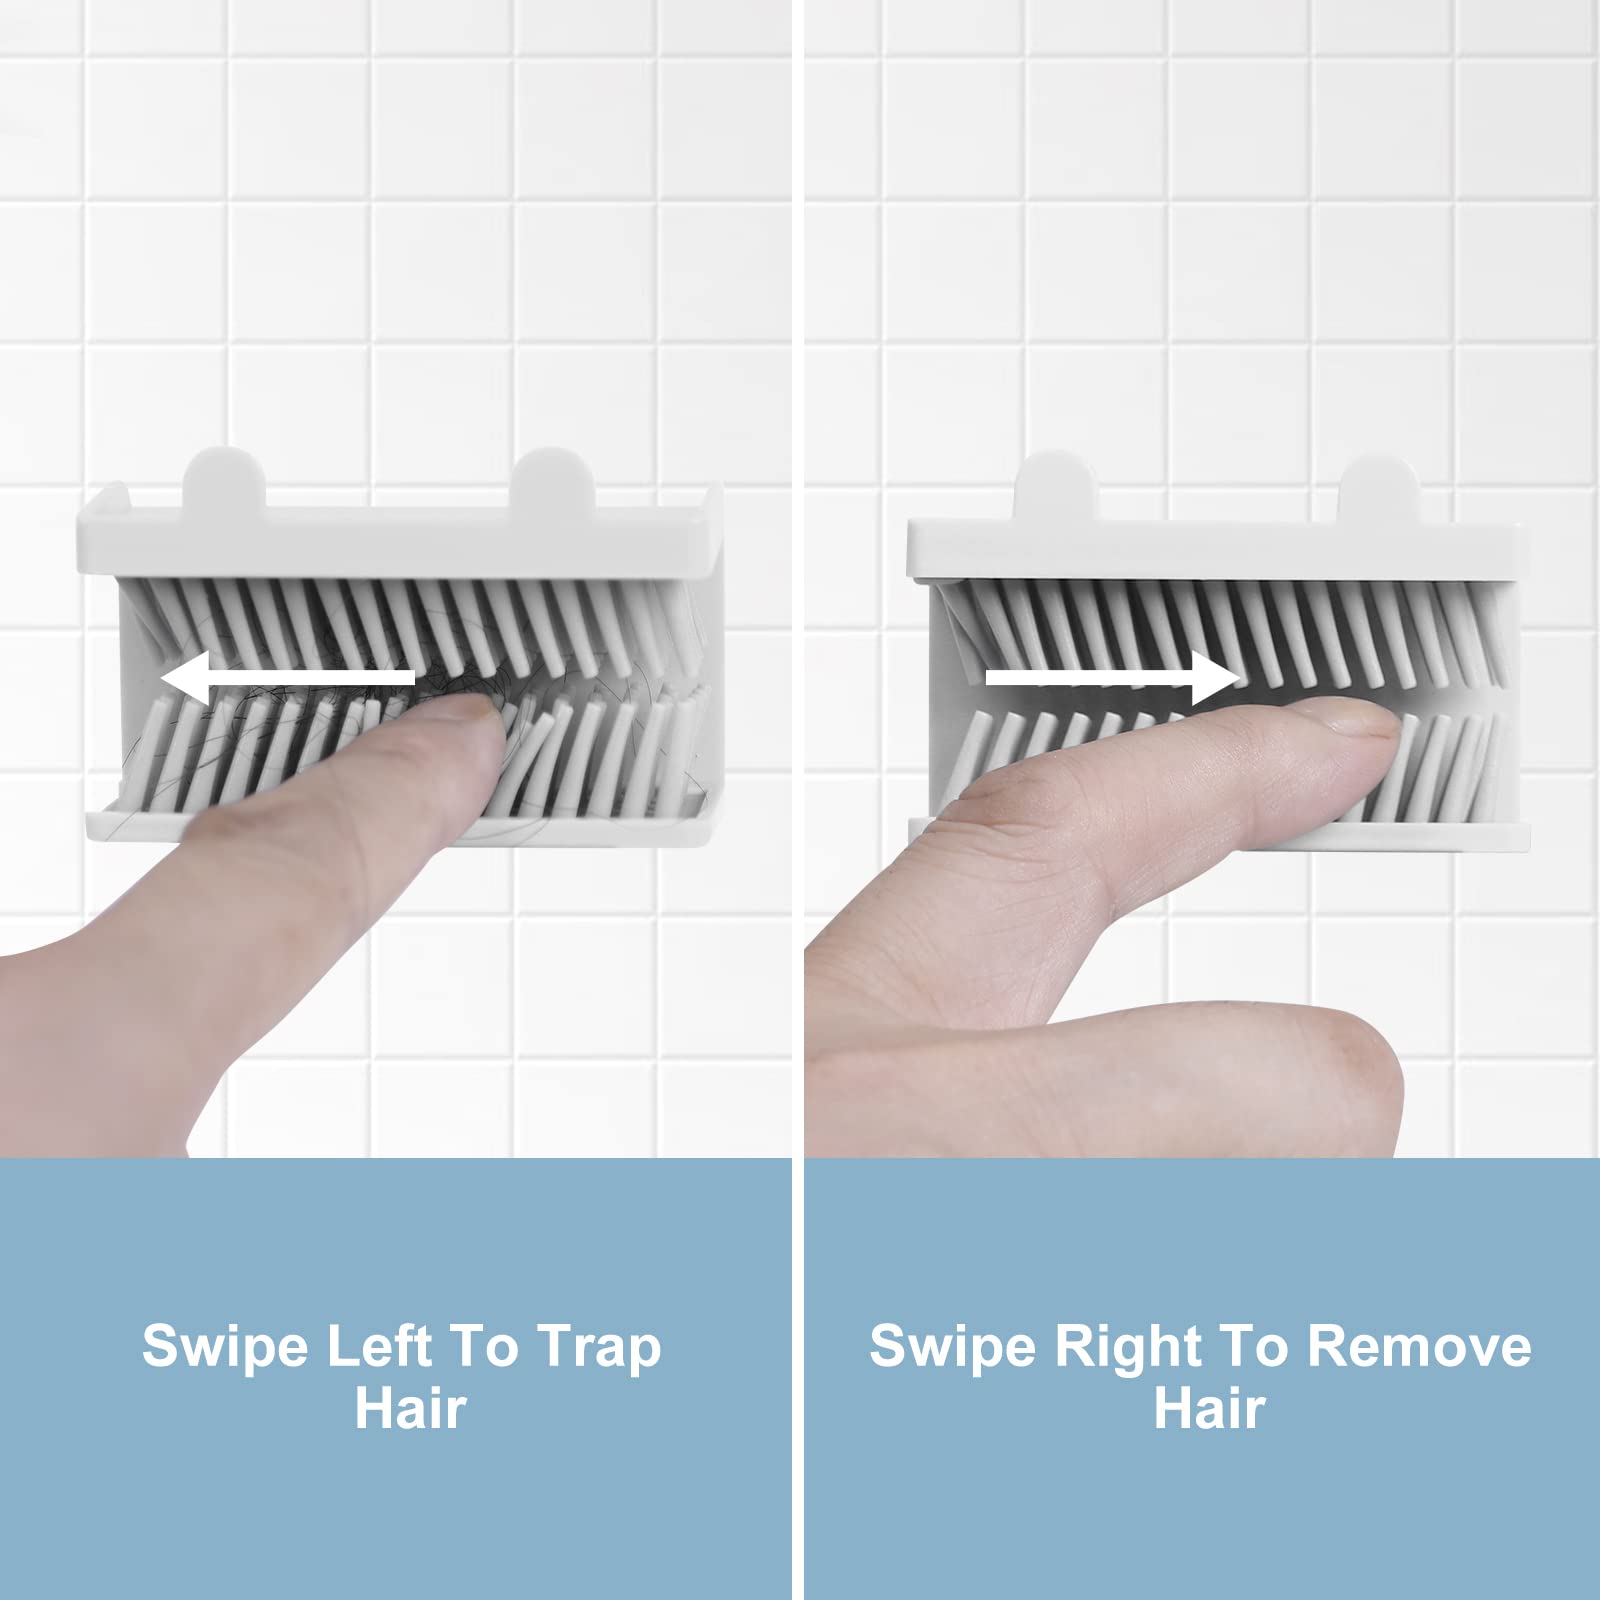 Hair Catcher, Reusable Shower Wall Hair Collector Hair Trap for Drain Protector, Silicone Hair Catcher for Bathroom Bathtub